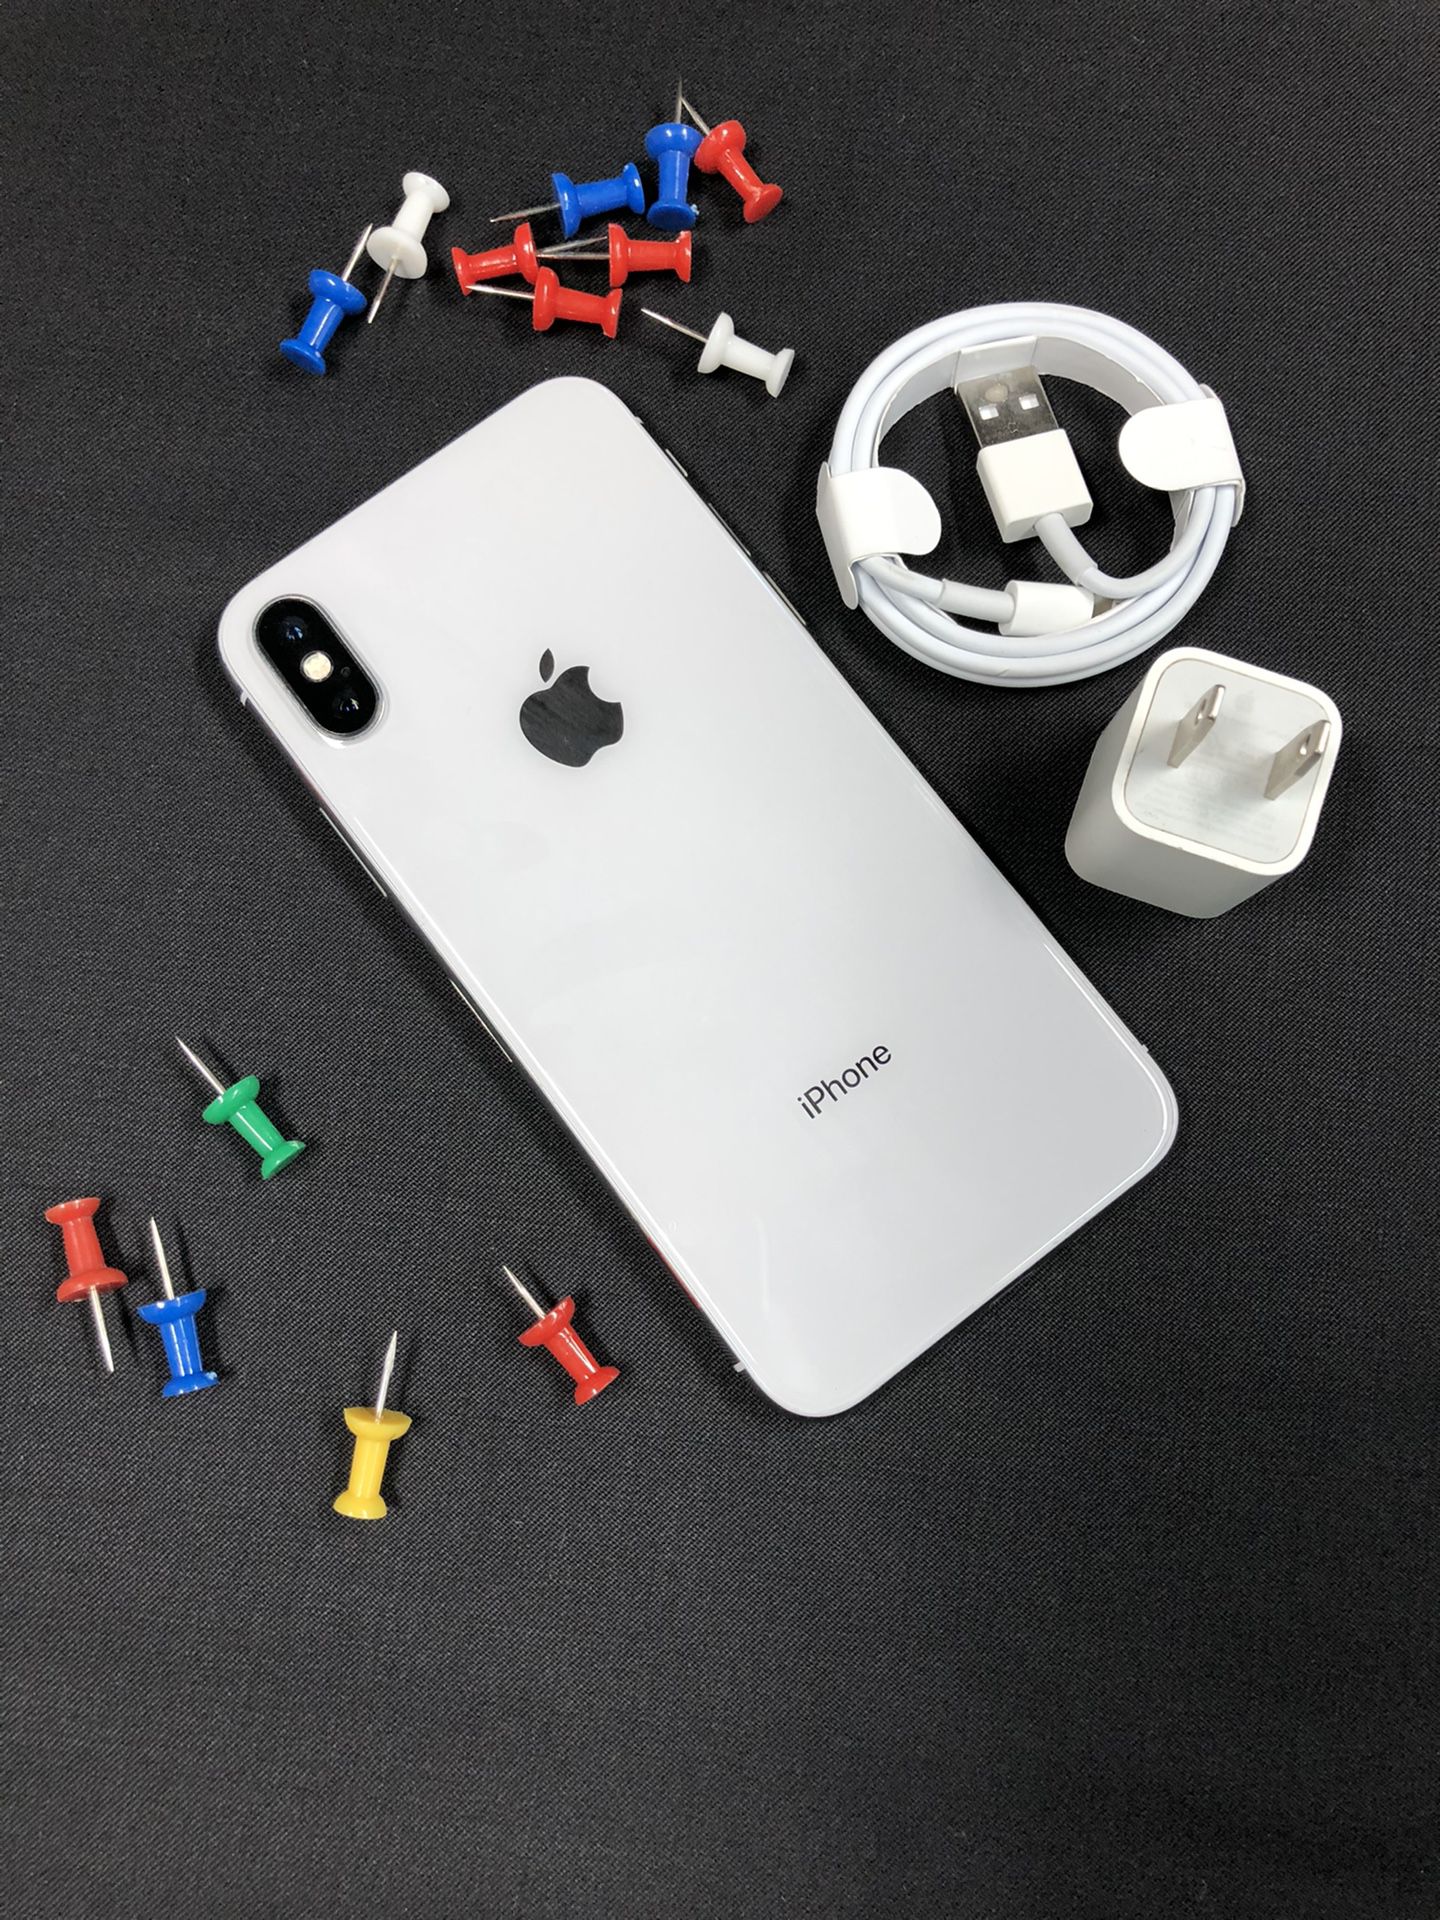 256Gb Silver iPhone X - Factory Unlocked.